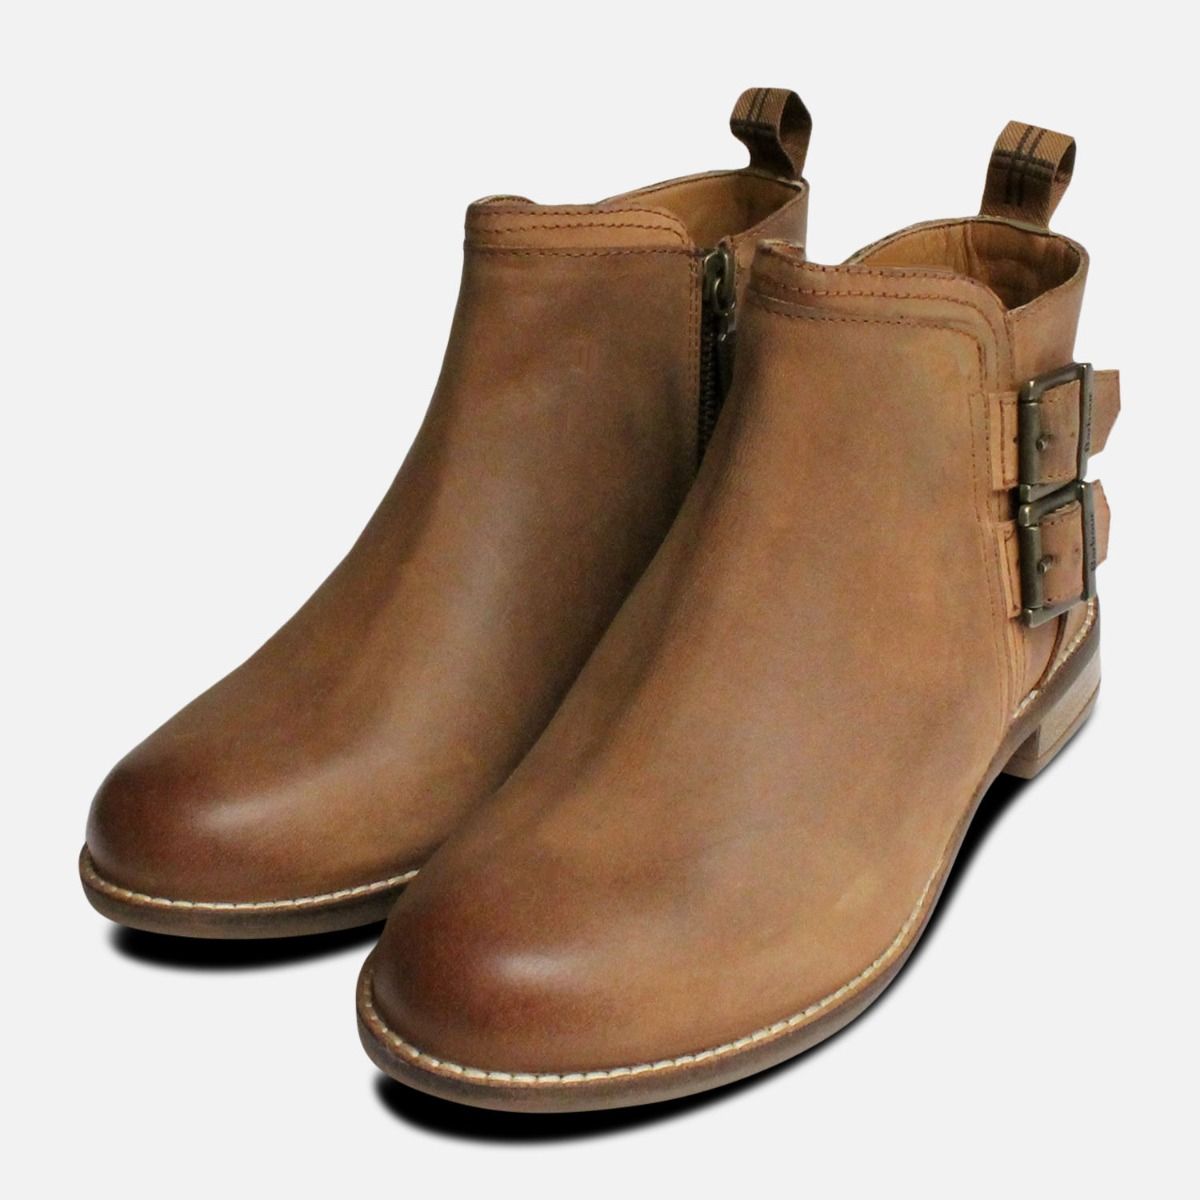 barbour boots sale uk